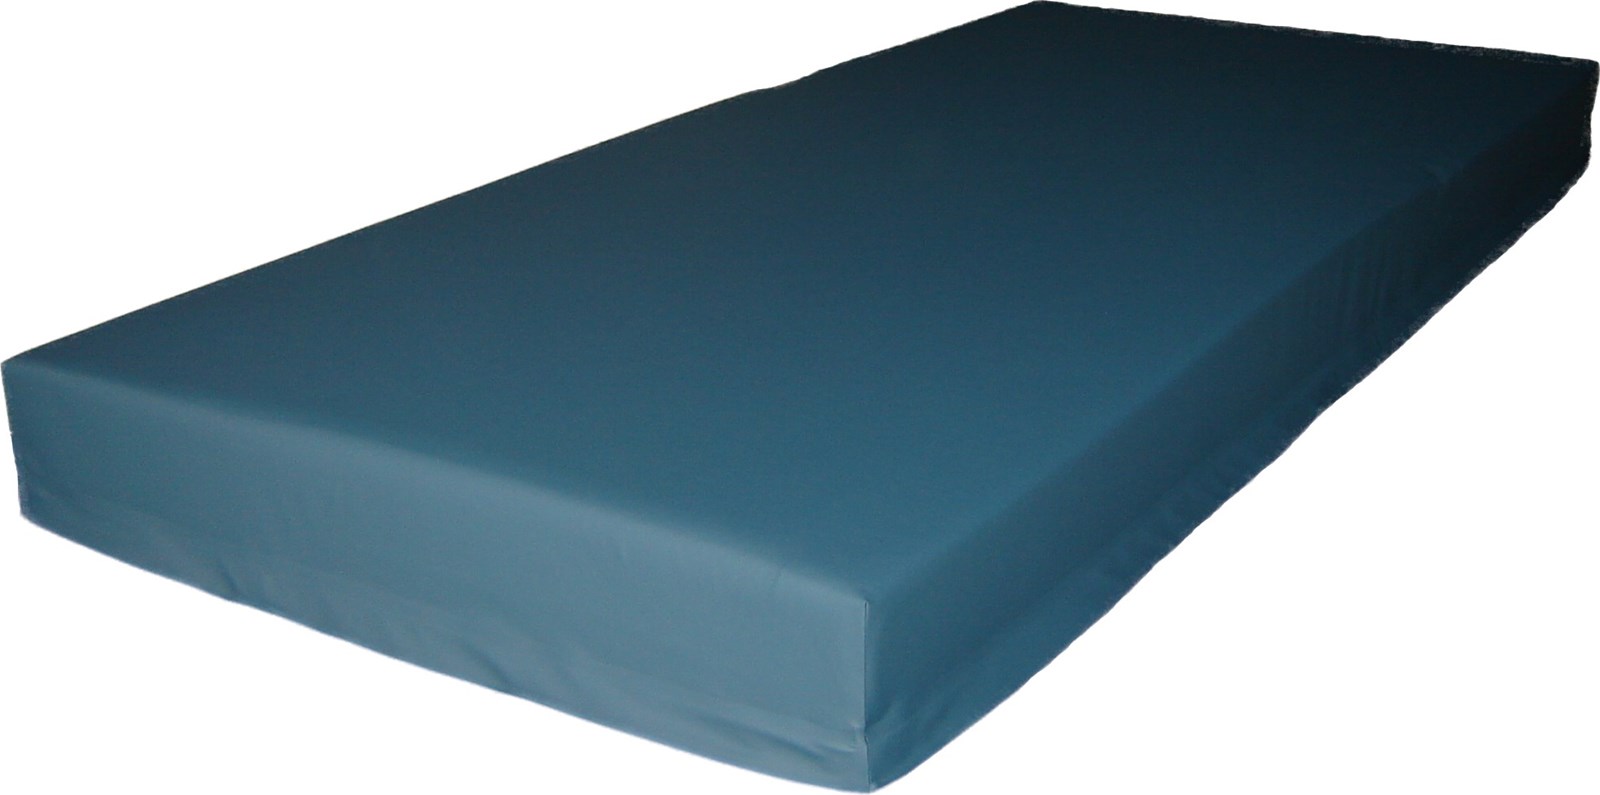 heavy duty zippered vinyl mattress cover